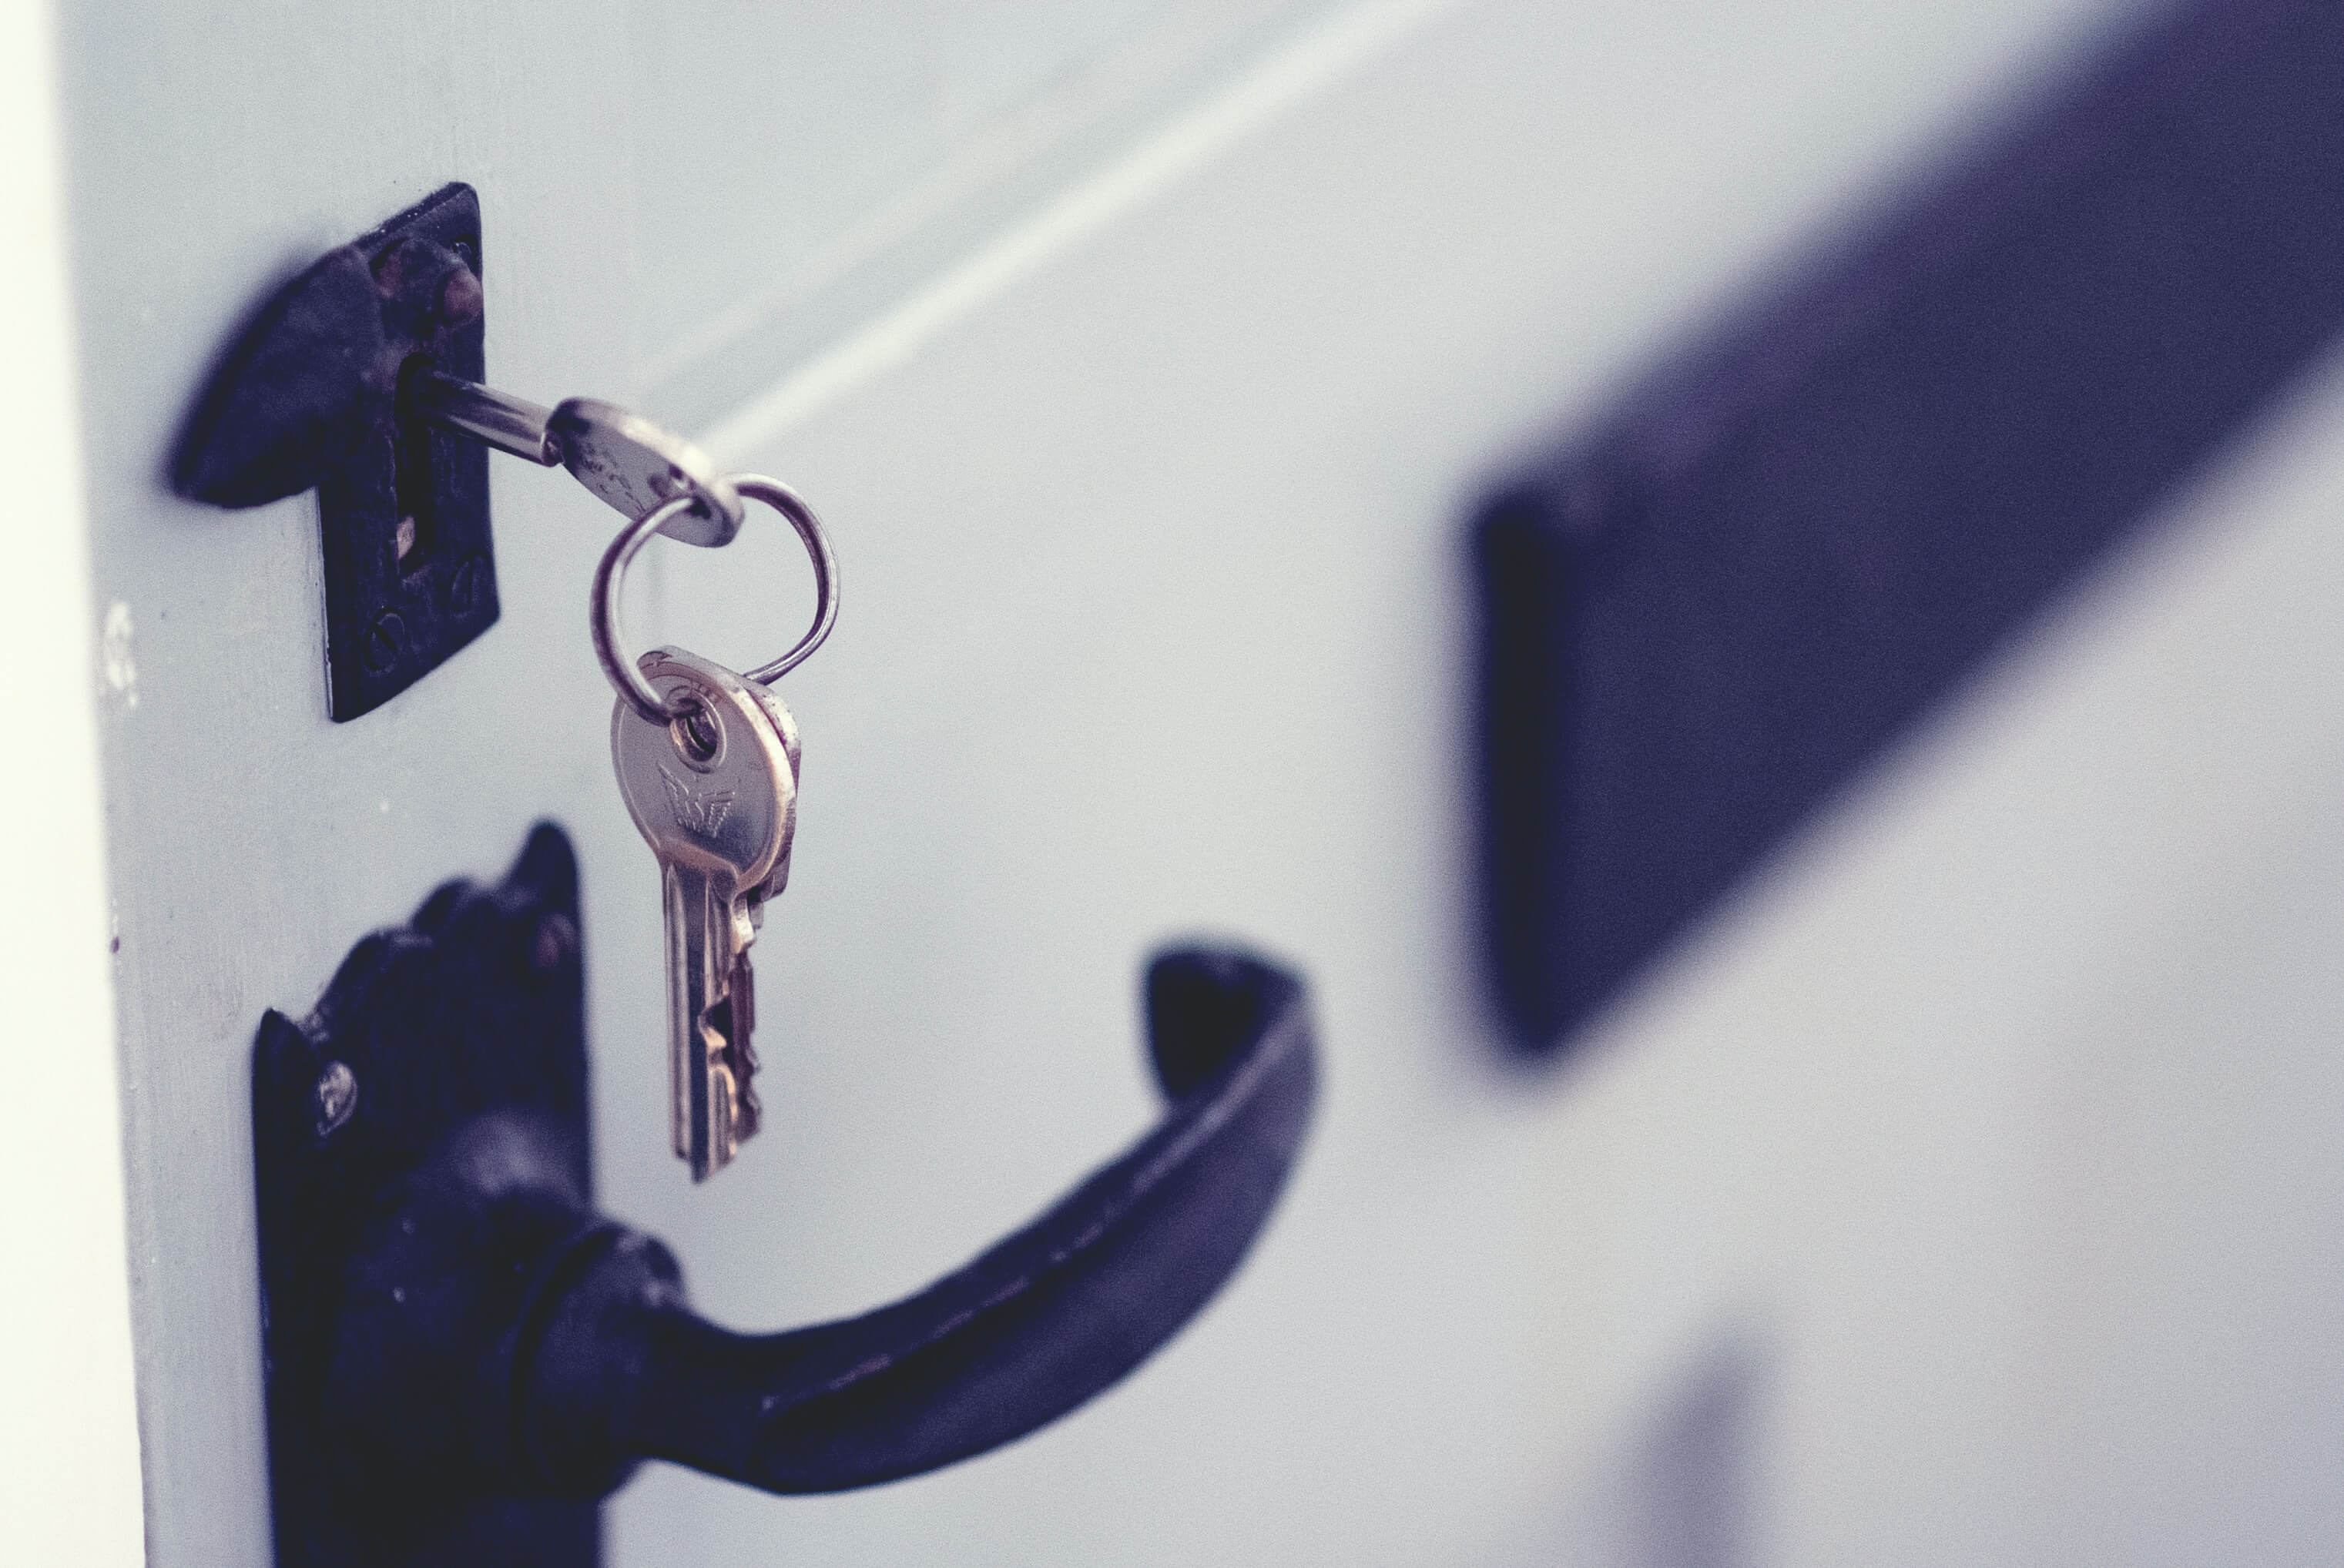 A silver key unlocking a door